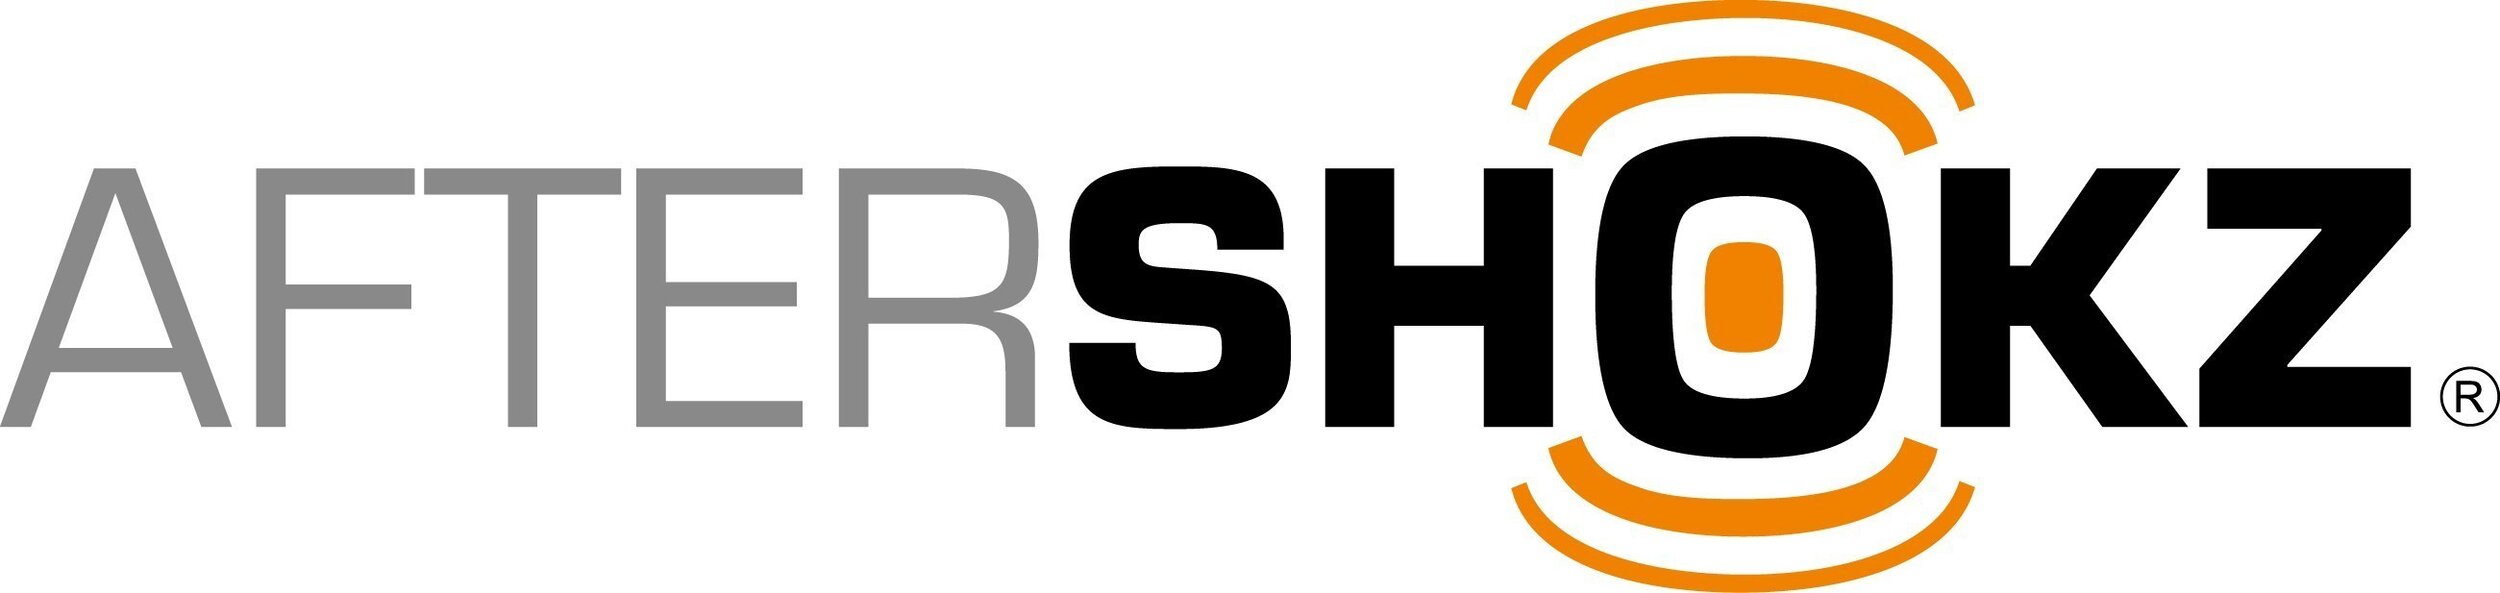 Aftershokz logo.jpg